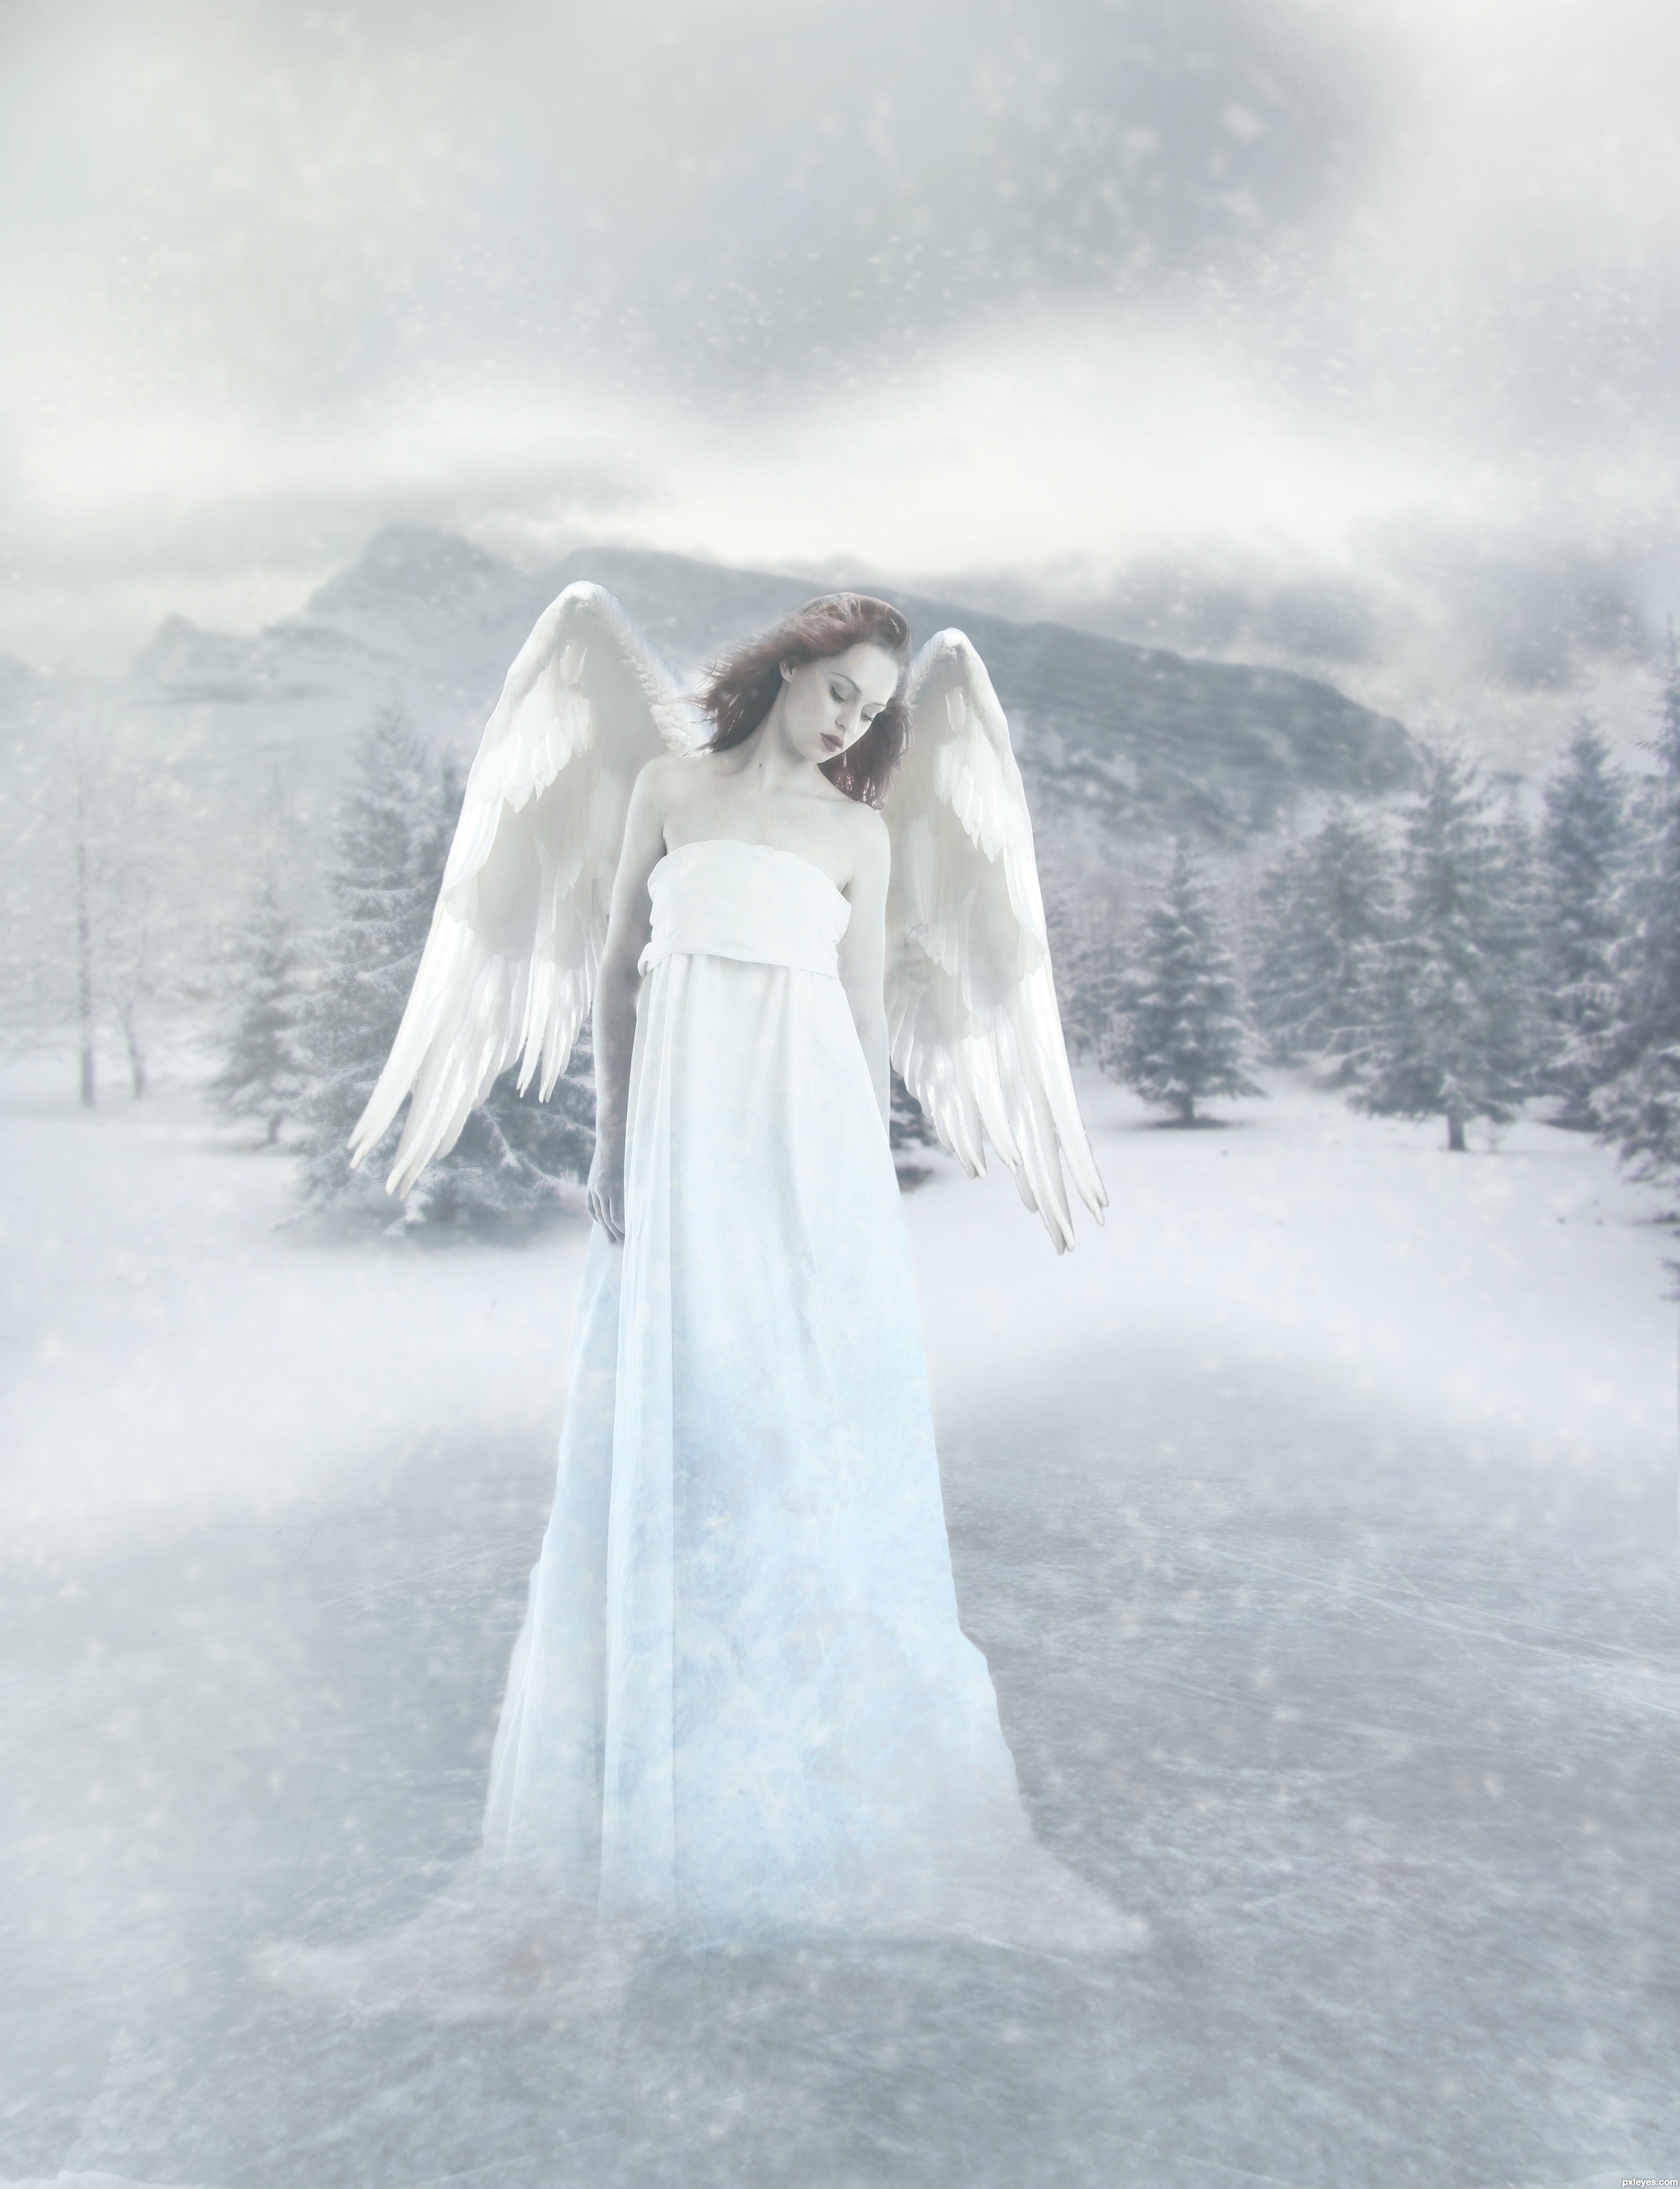 snow angel clipart - photo #43